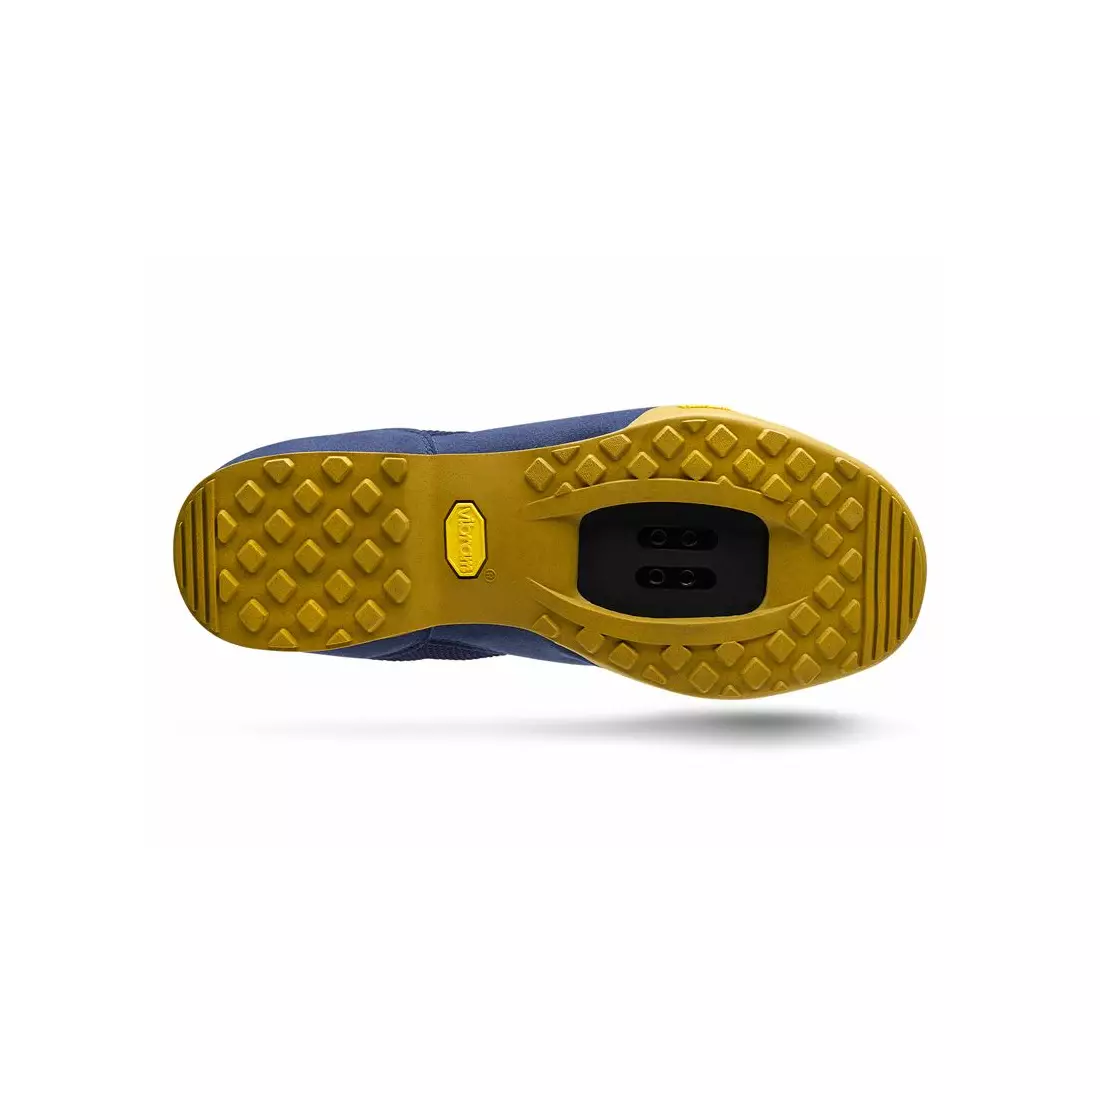 GIRO RUMBLE VR - Men's MTB cycling shoes, trekking dress blue gum